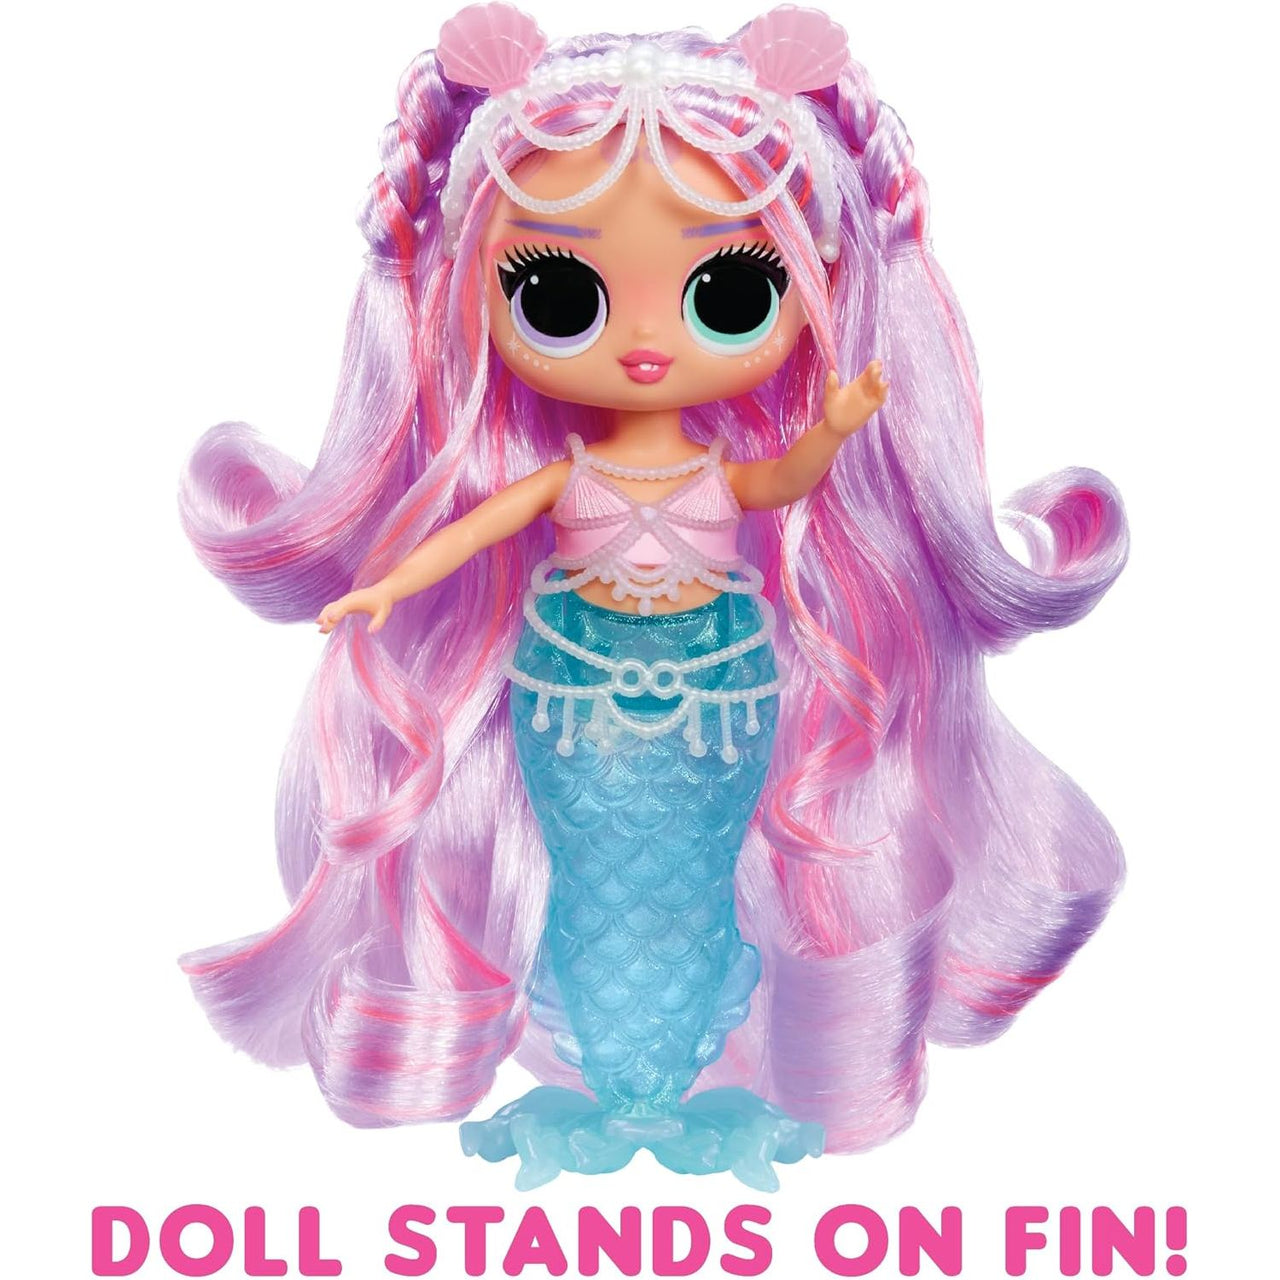 L.O.L Surprise Tweens Mermaid Doll - Lana Marine LOL Surprise